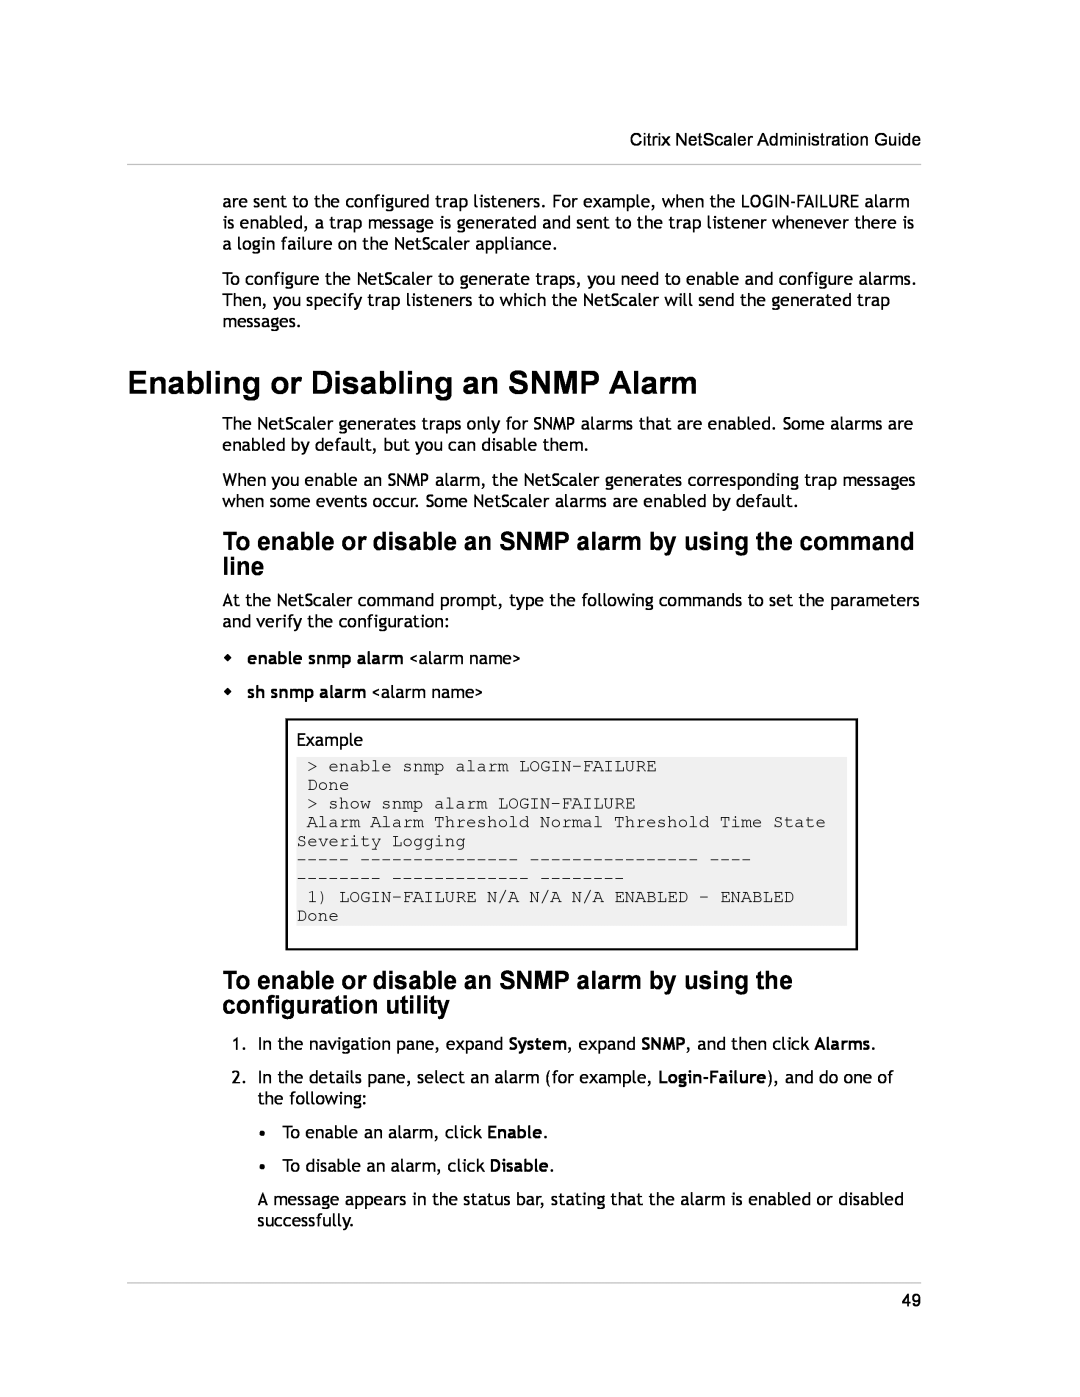 Citrix Systems CITRIX NETSCALER 9.3 manual Enabling or Disabling an SNMP Alarm 